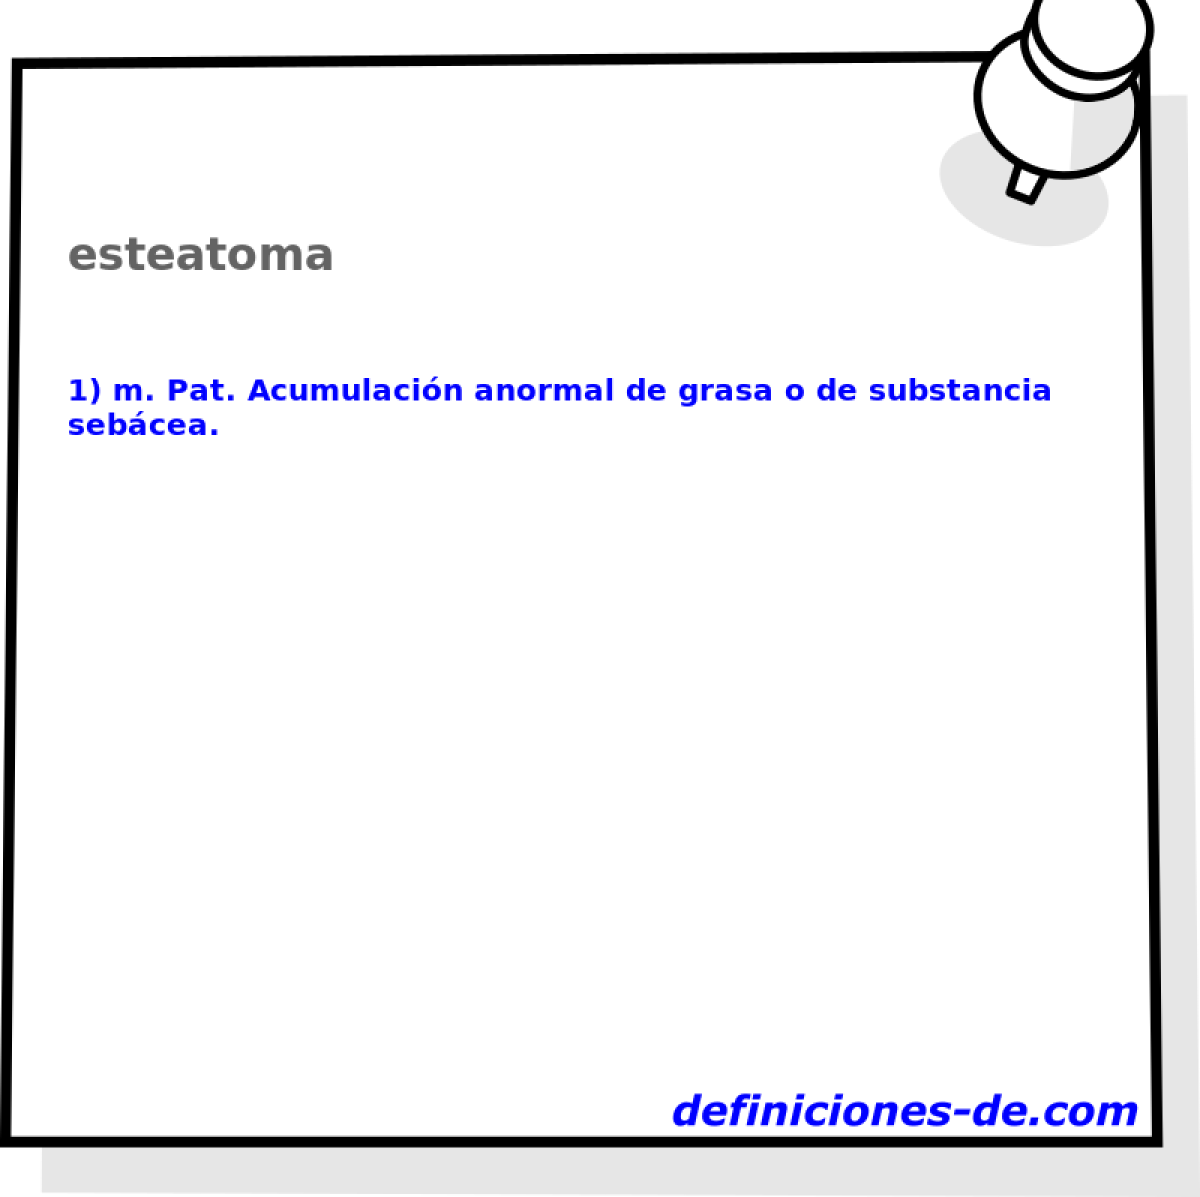 esteatoma 